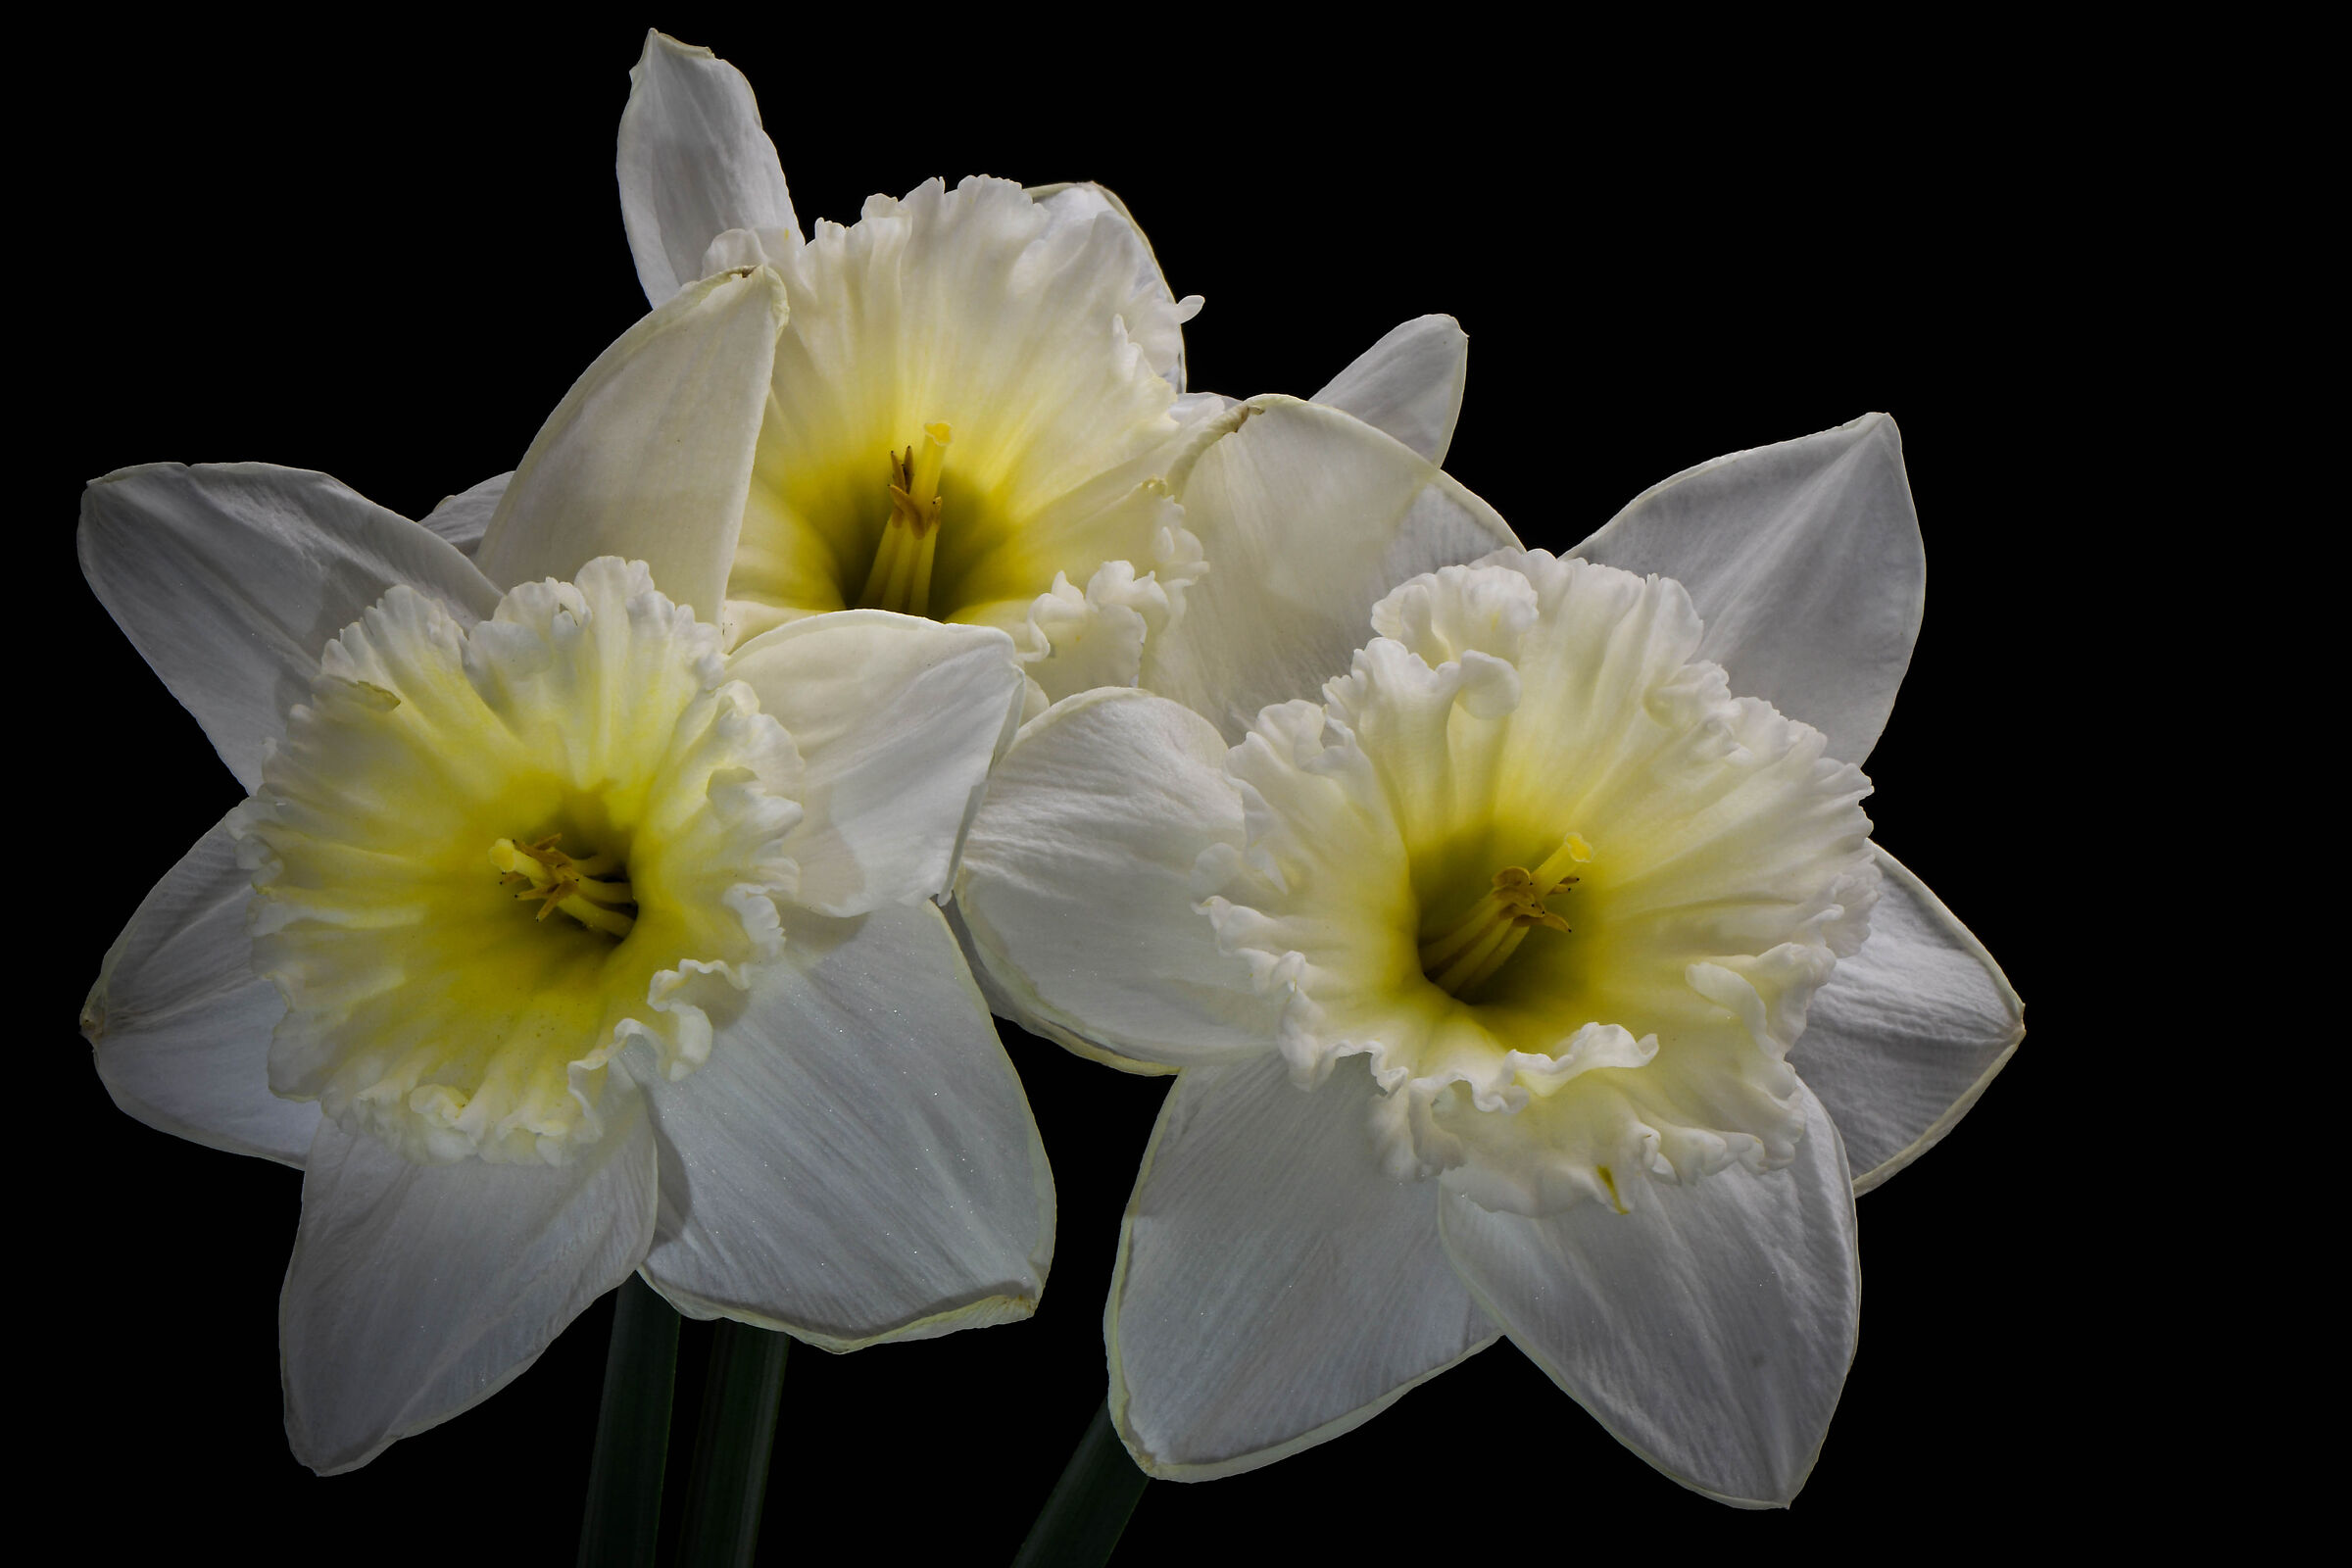 Tris of mature Daffodils....